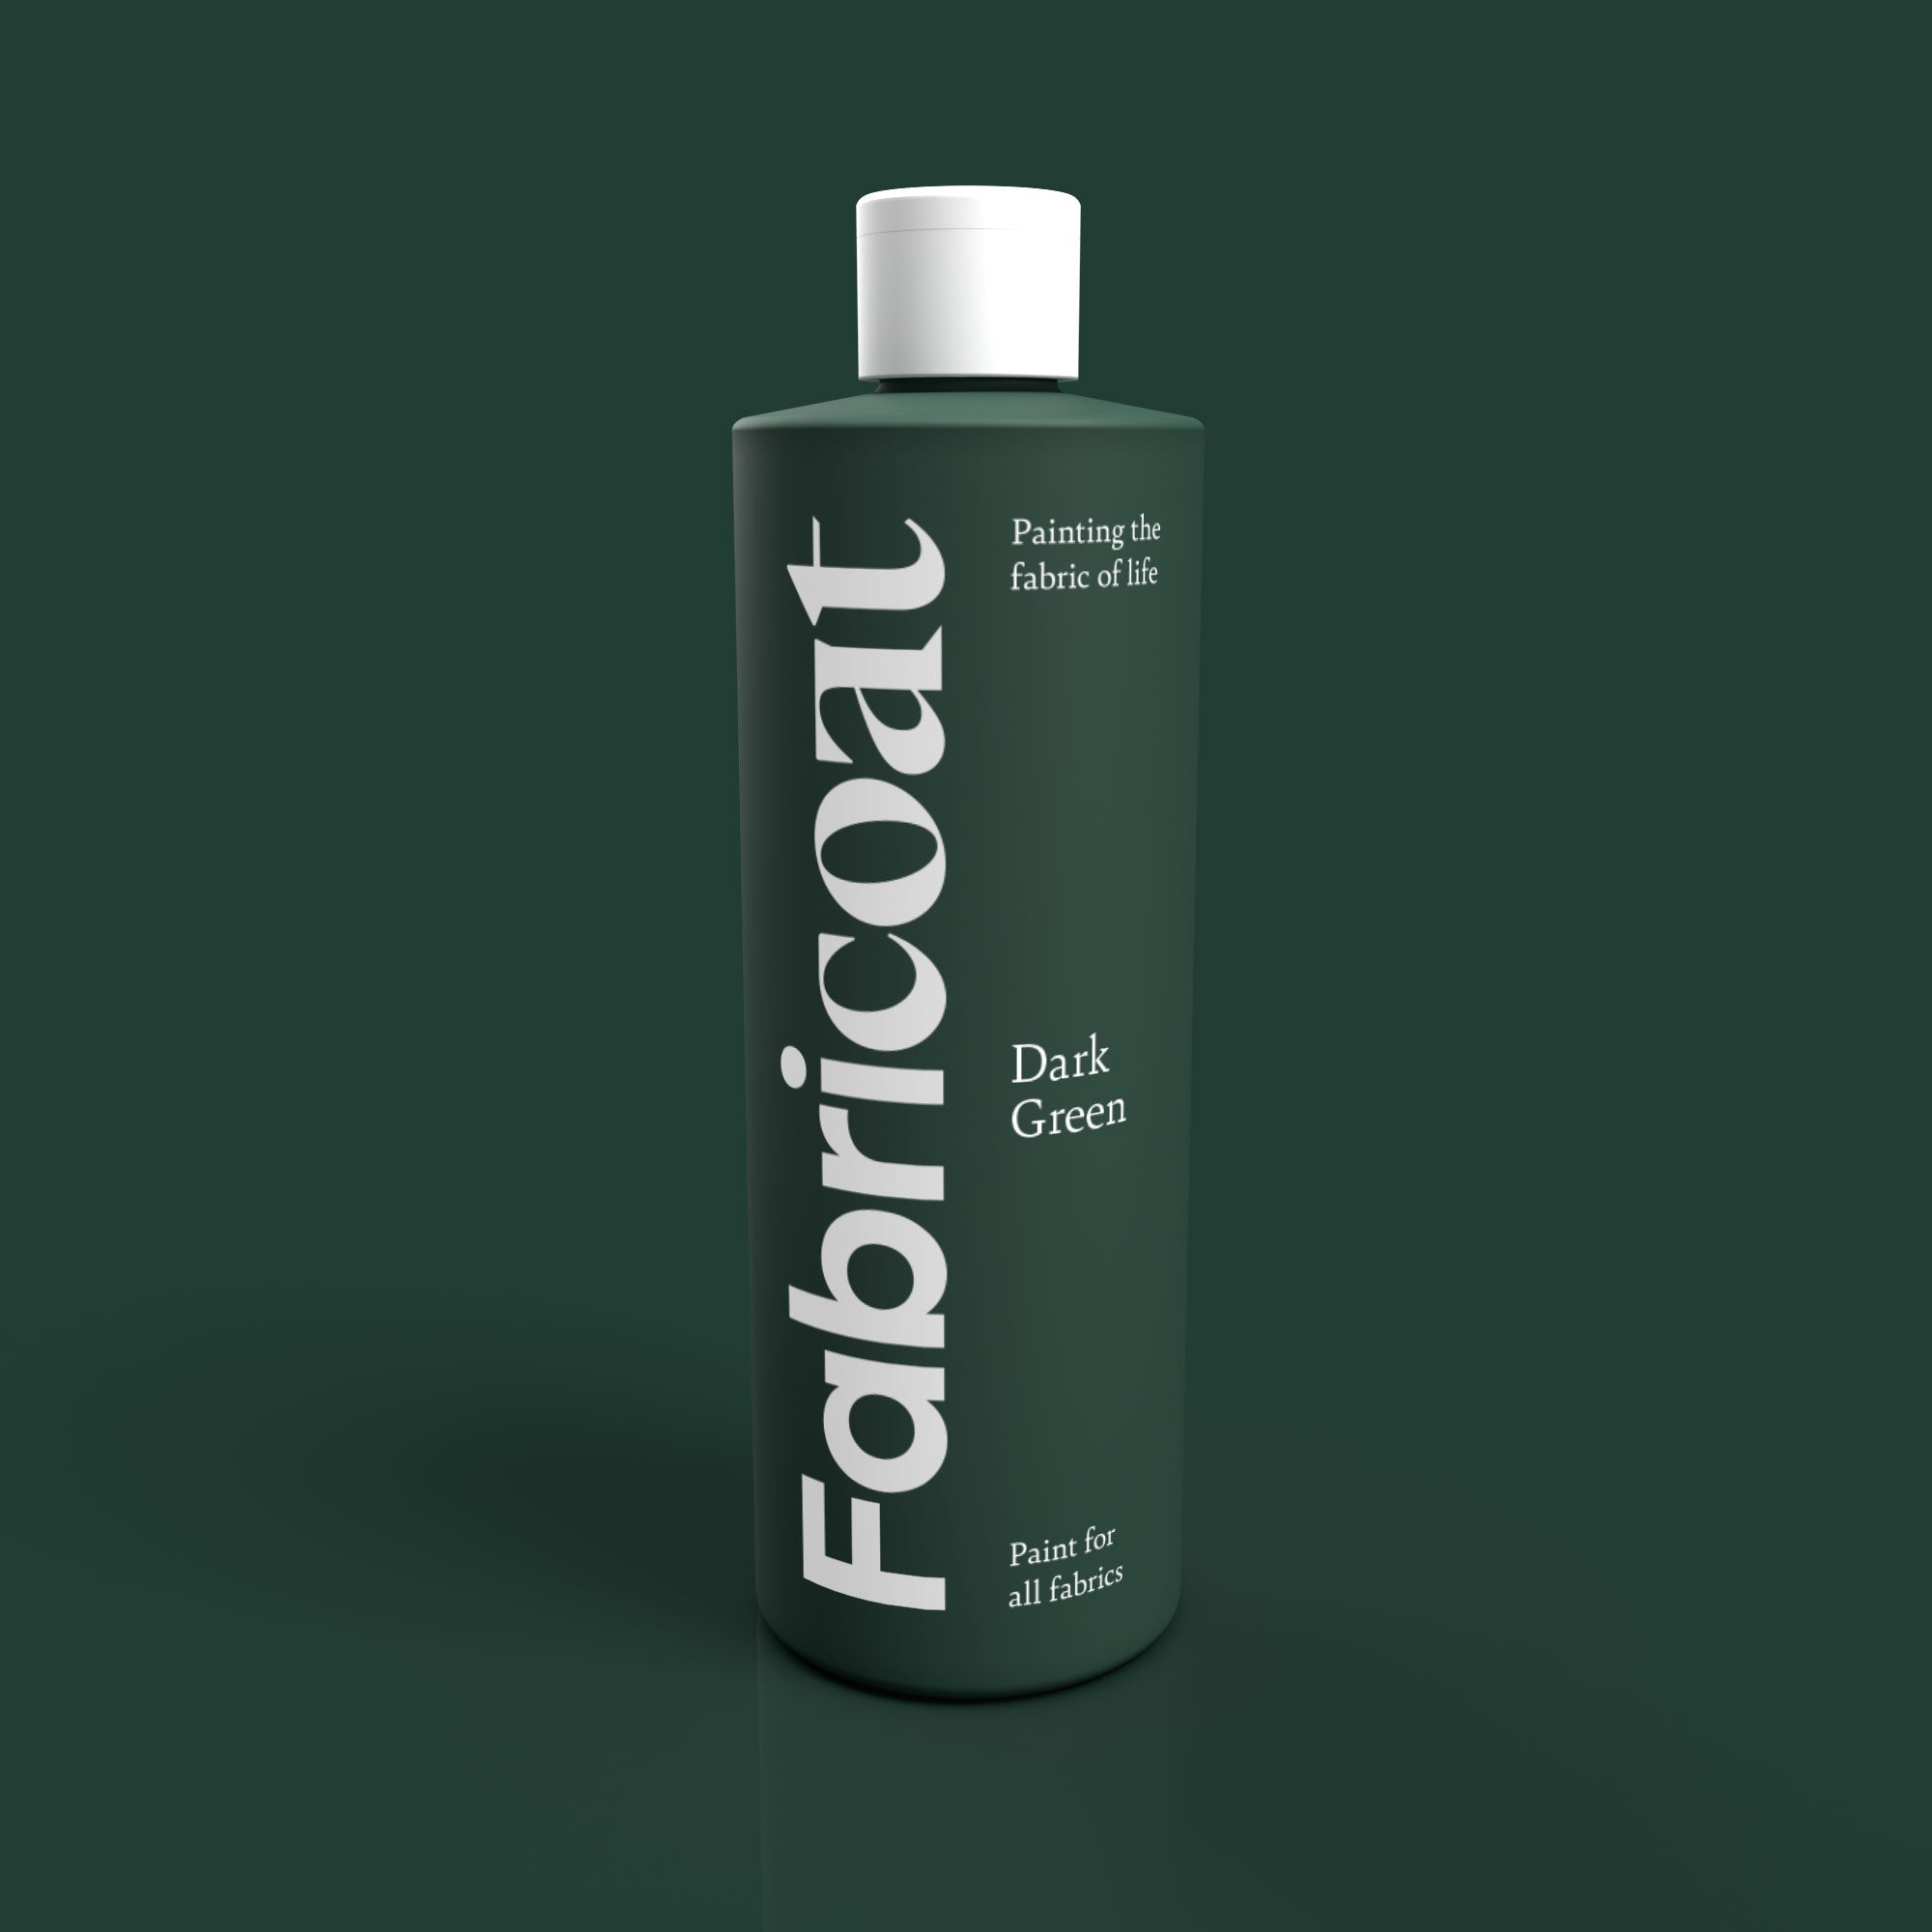 Fabricoat Dark Green Fabric Paint 500ml Bottle